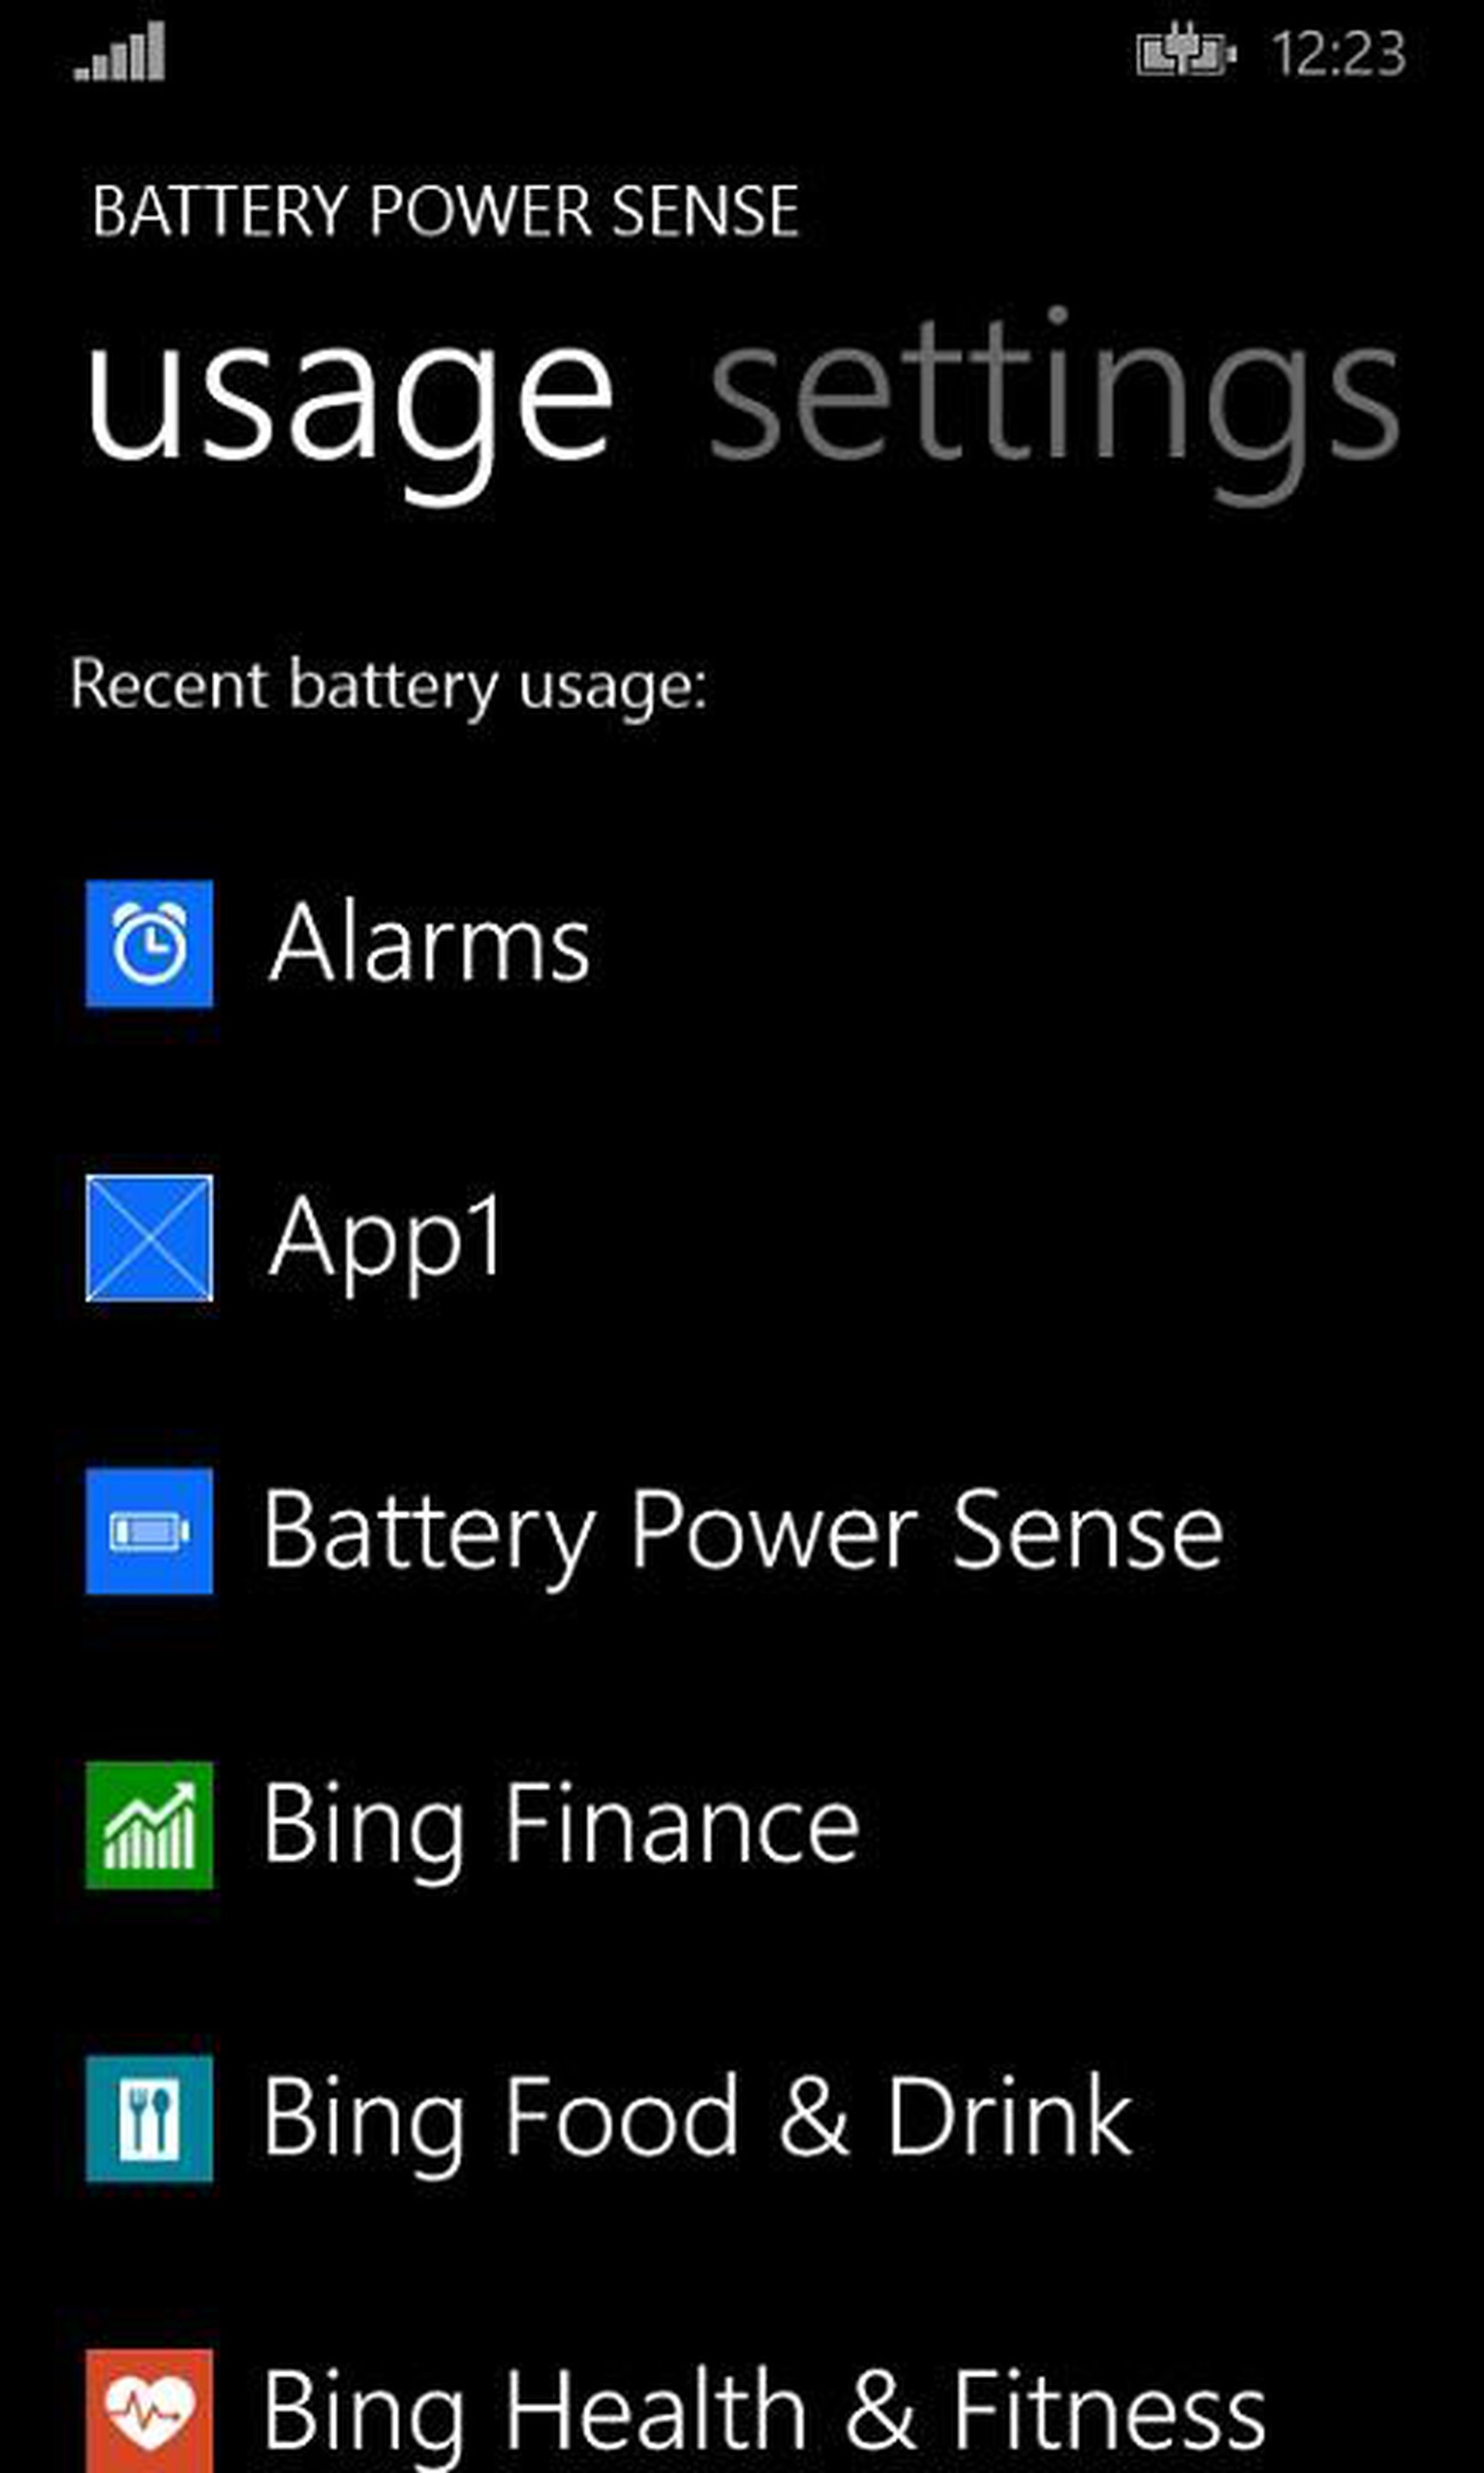 Windows Phone 8.1 SDK screenshots